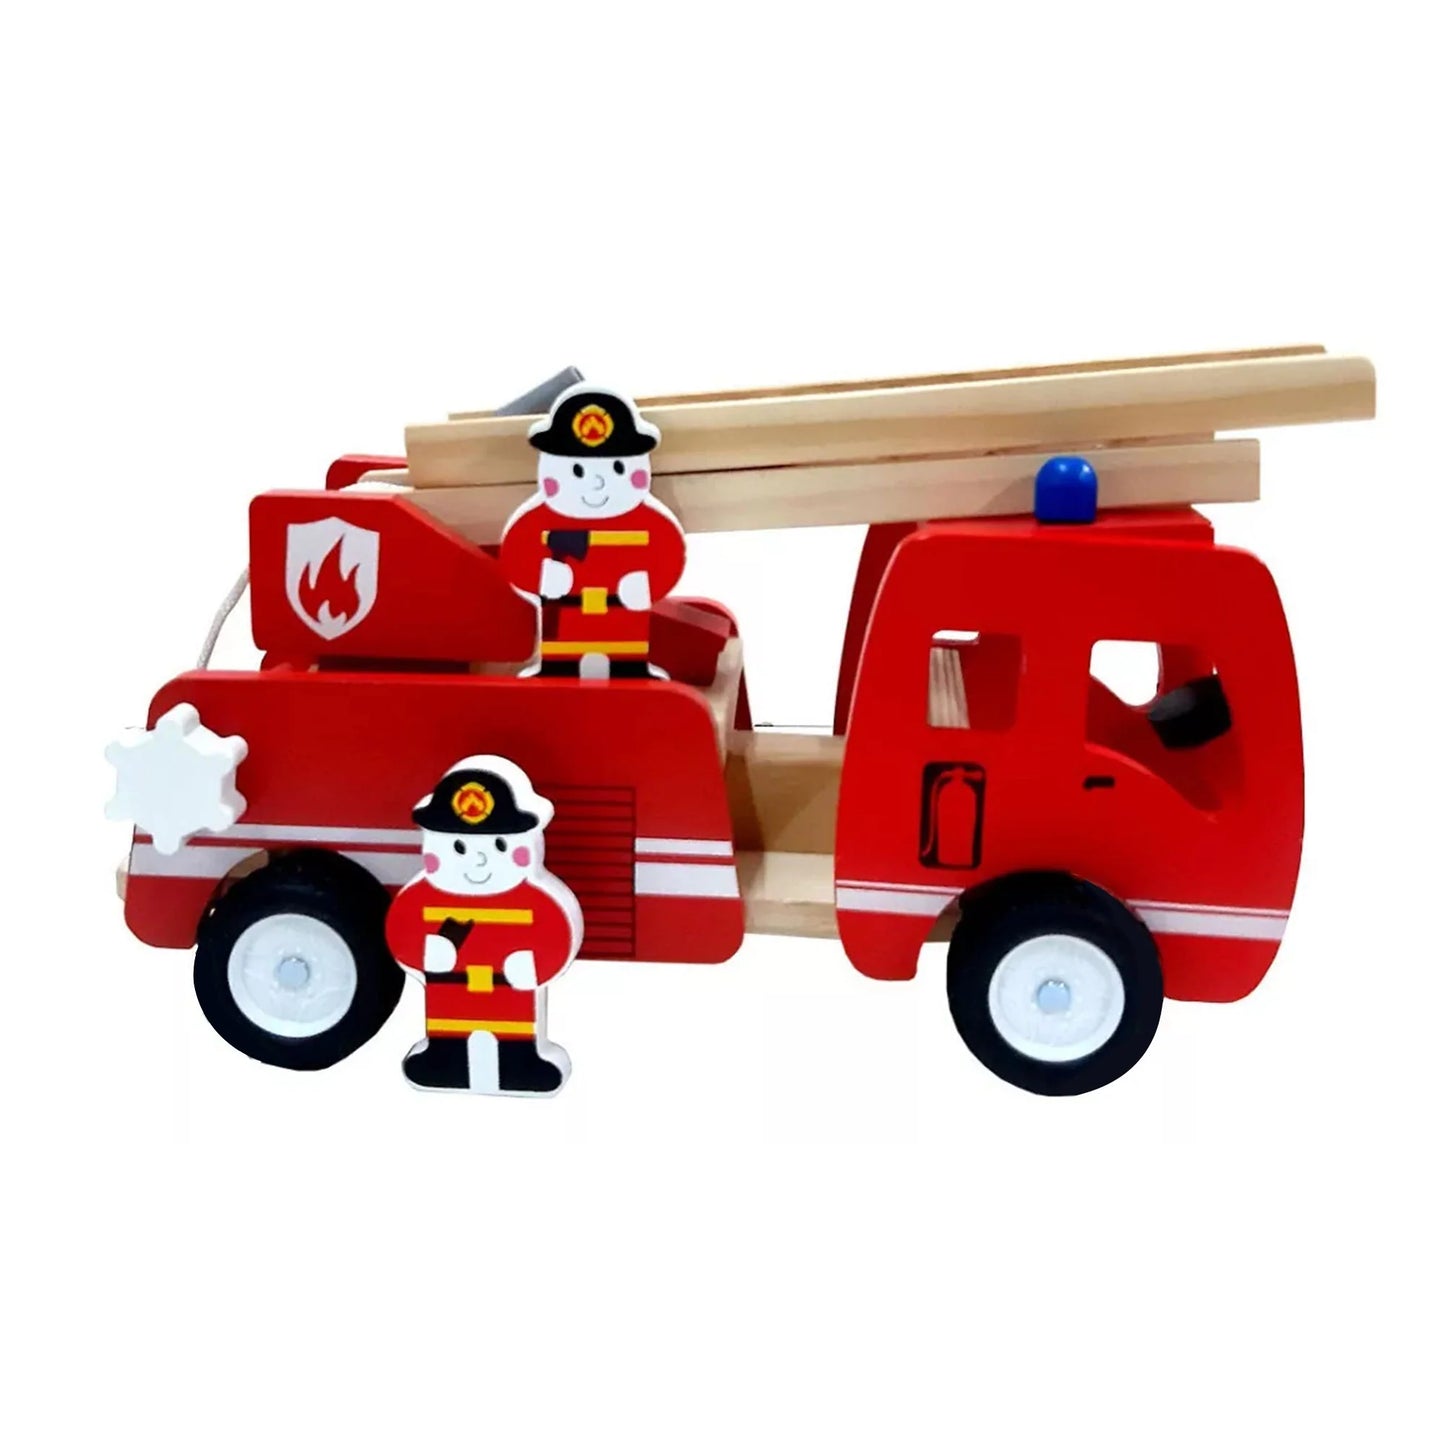 Wooden Fire Truck for Kids